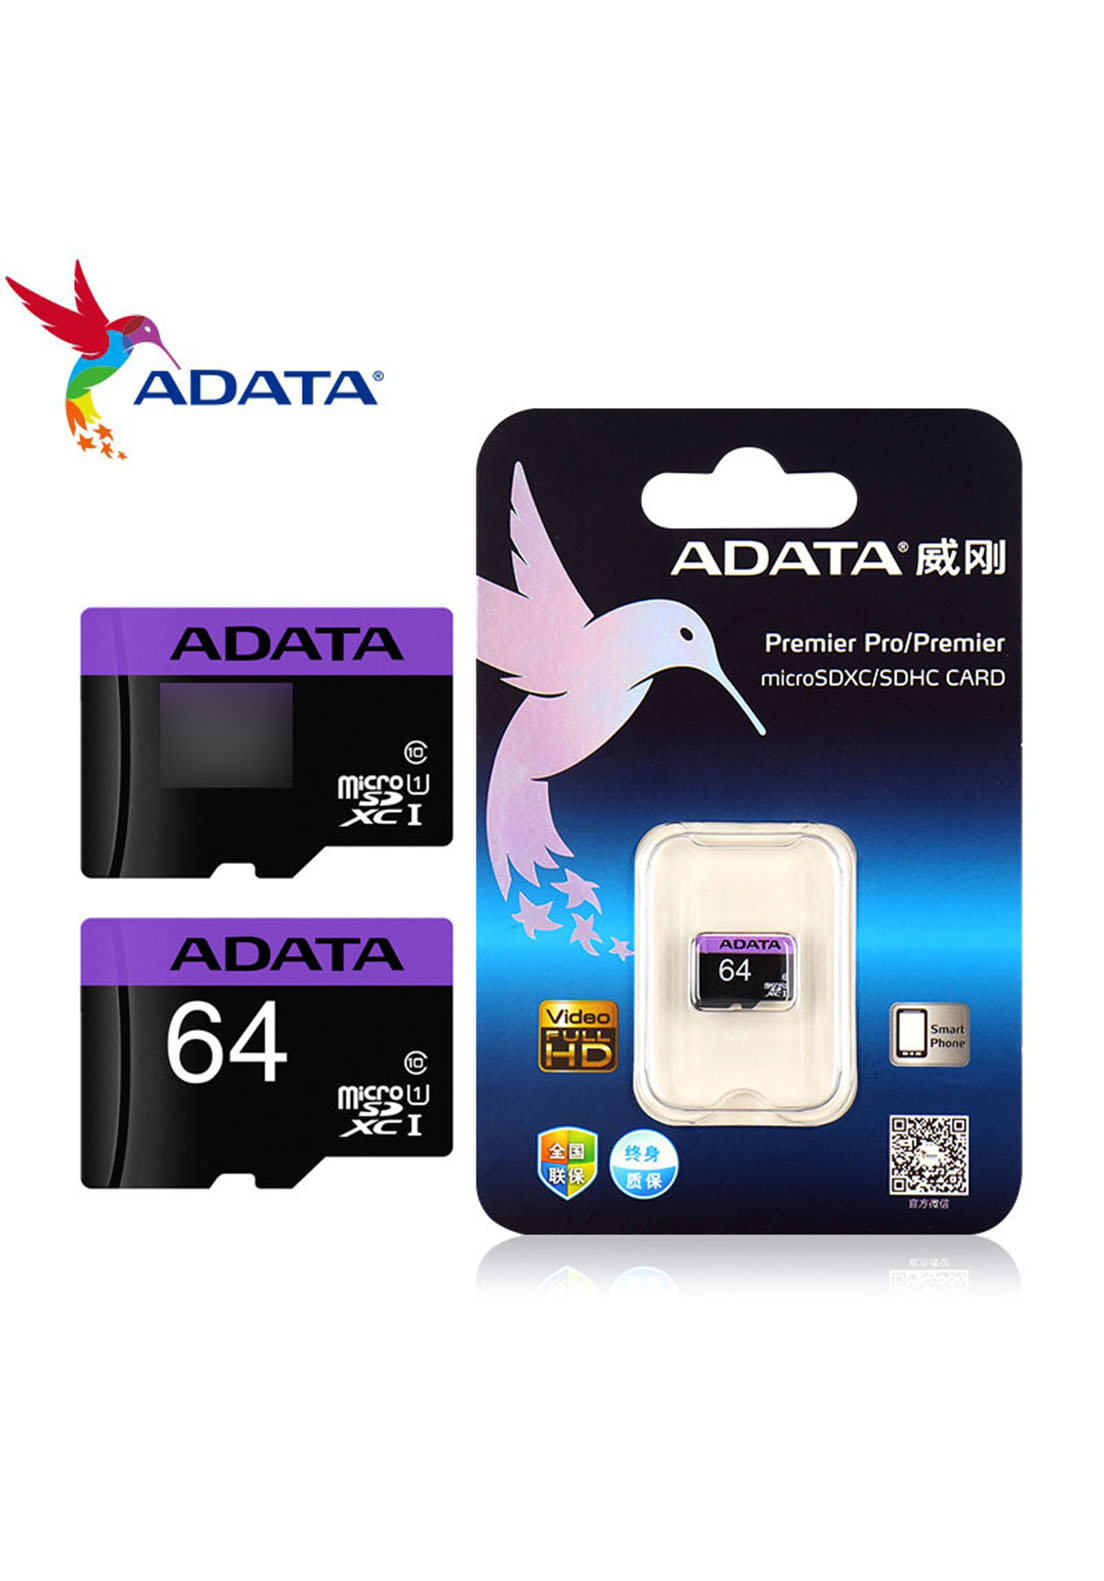 Adata Micro Sd Card 128gb, Adata 128gb Memory Card